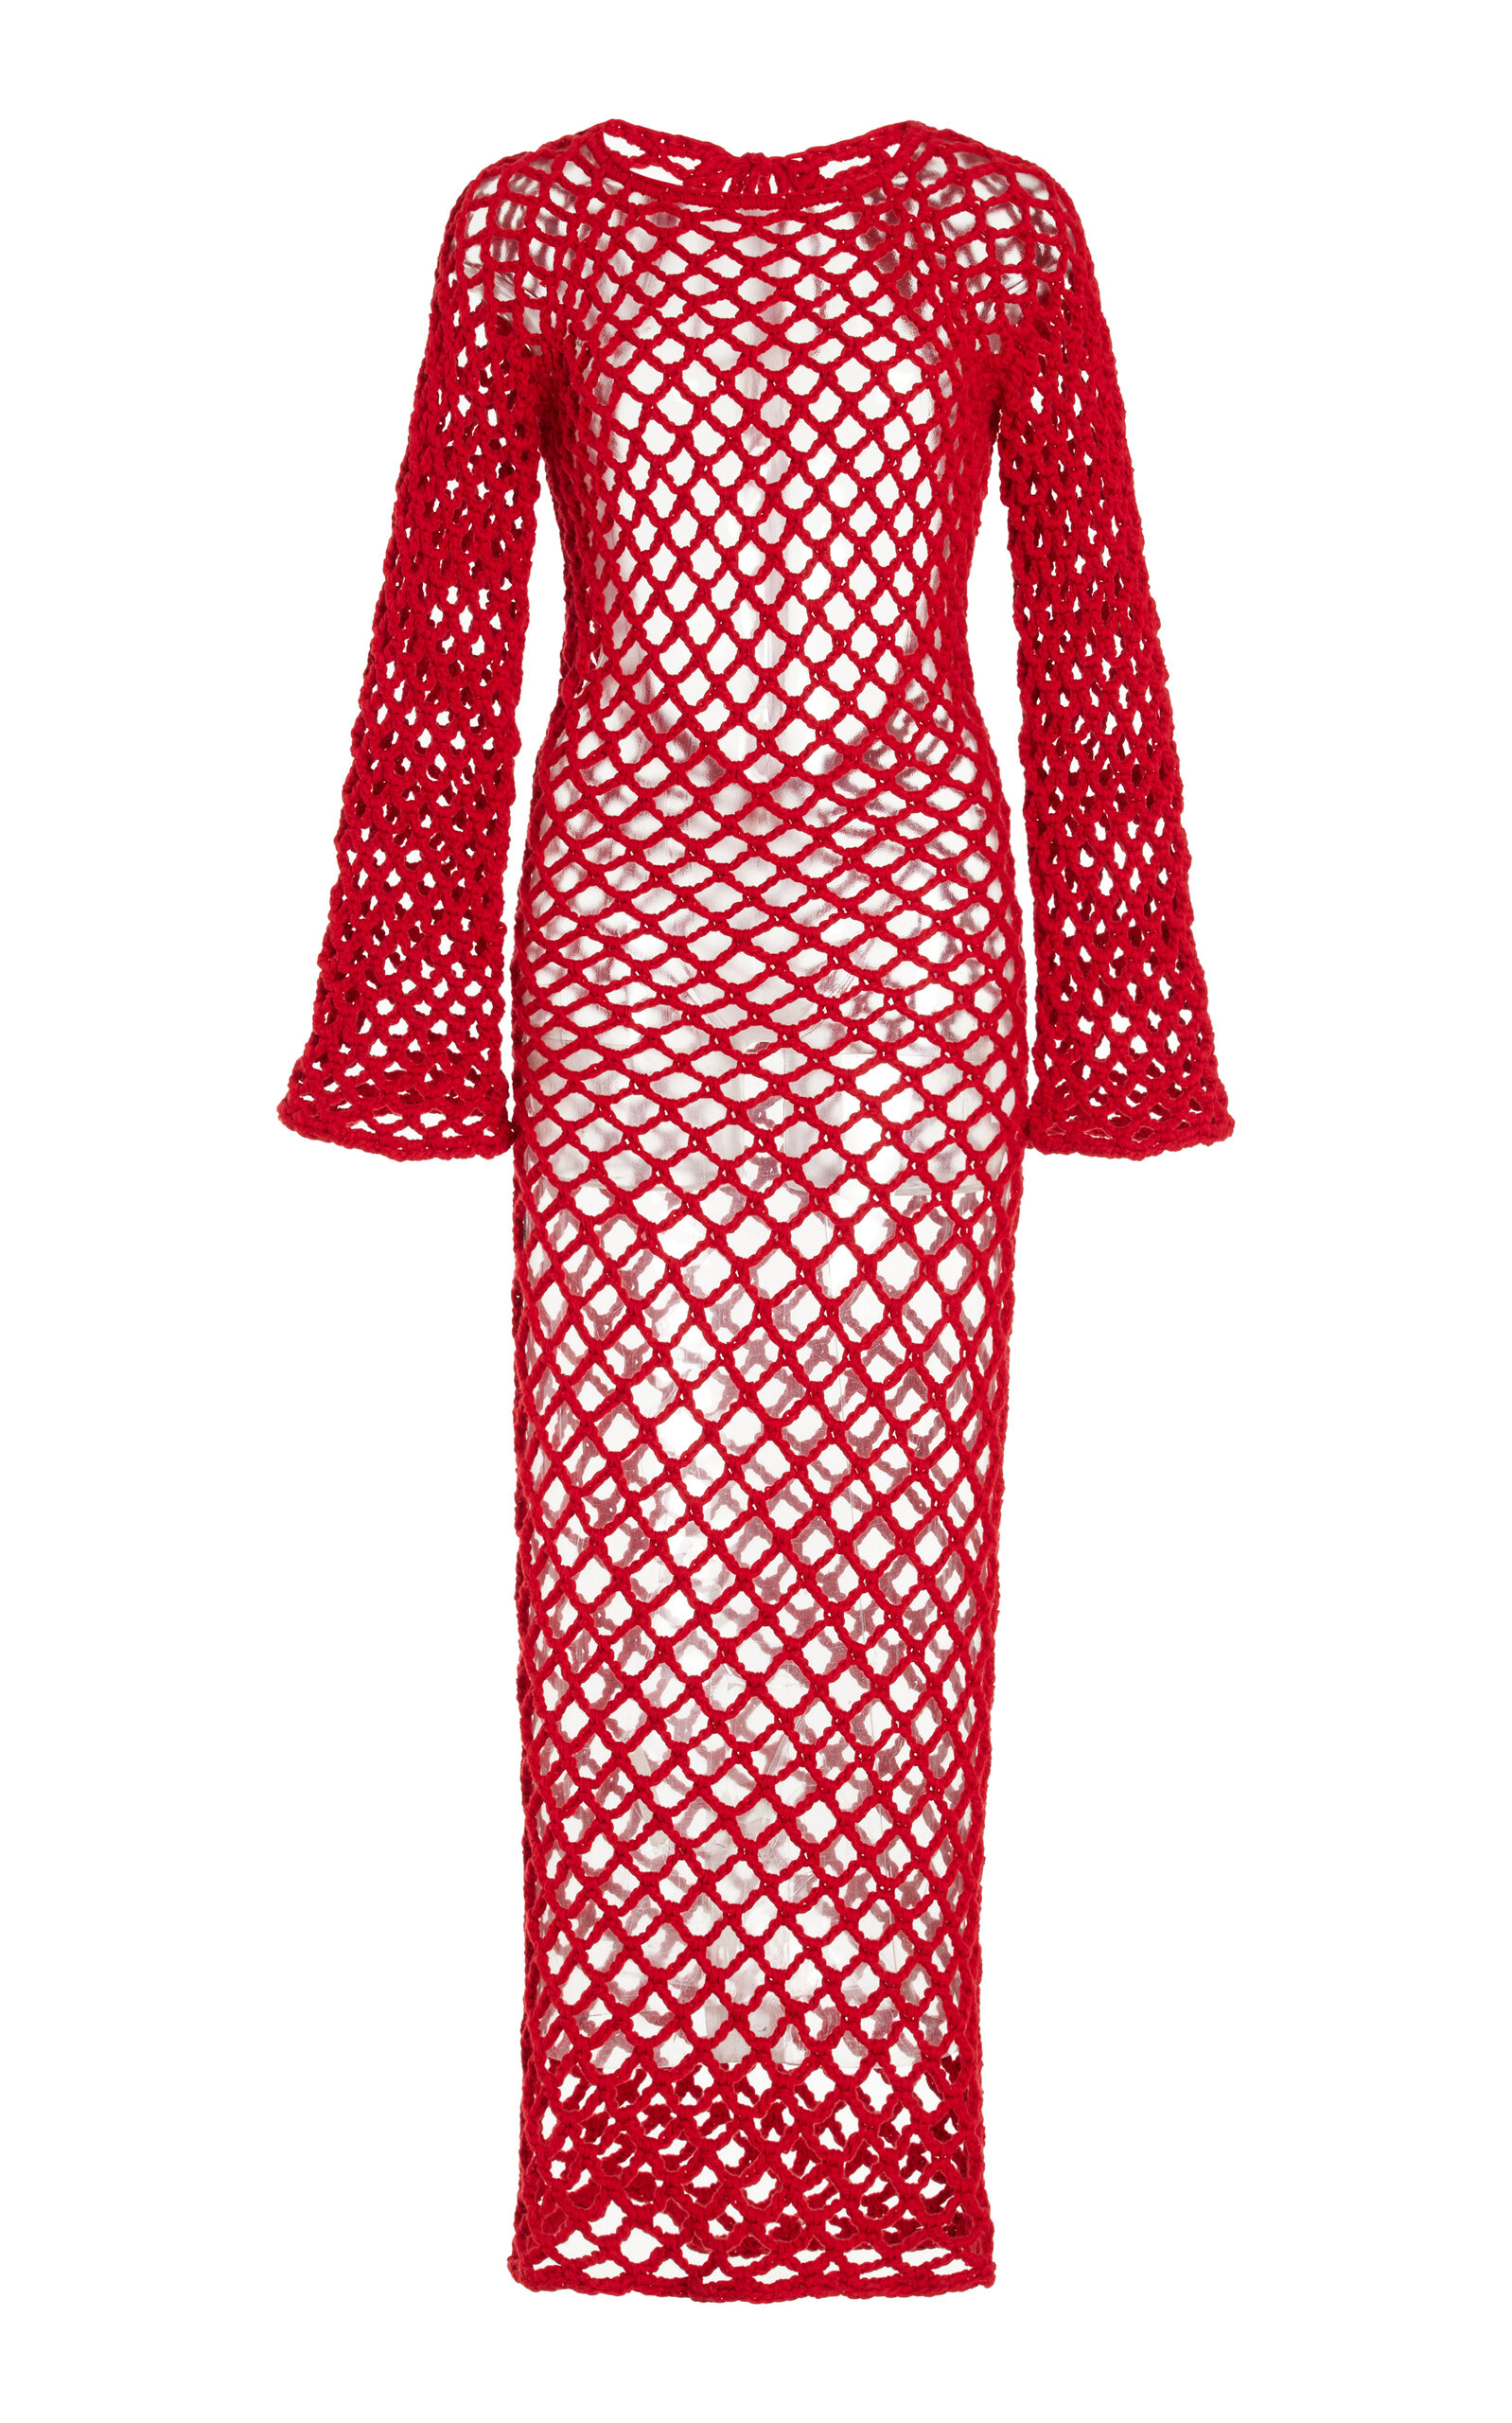 Nia Thomas High Priestess Crocheted Cotton Maxi Dress In Red